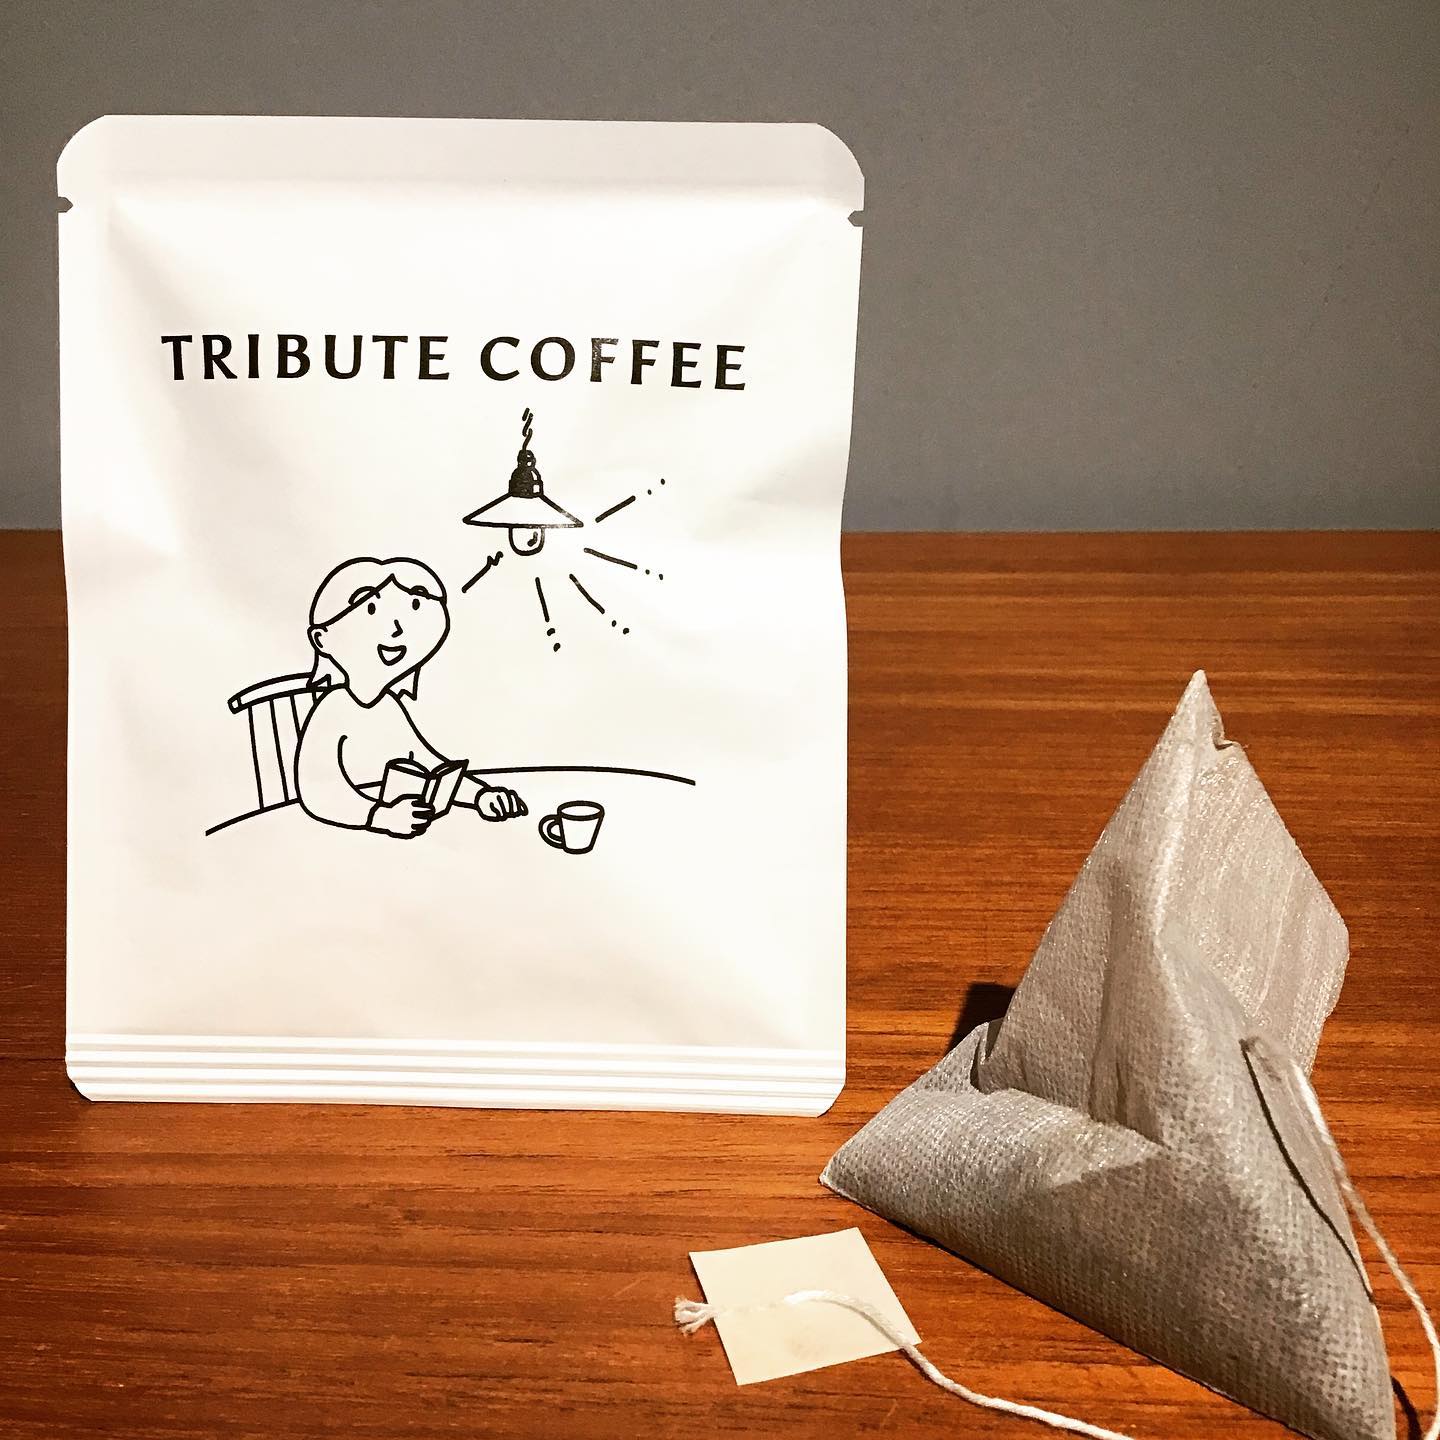 [Tribute Coffee]refreshing / relaxing